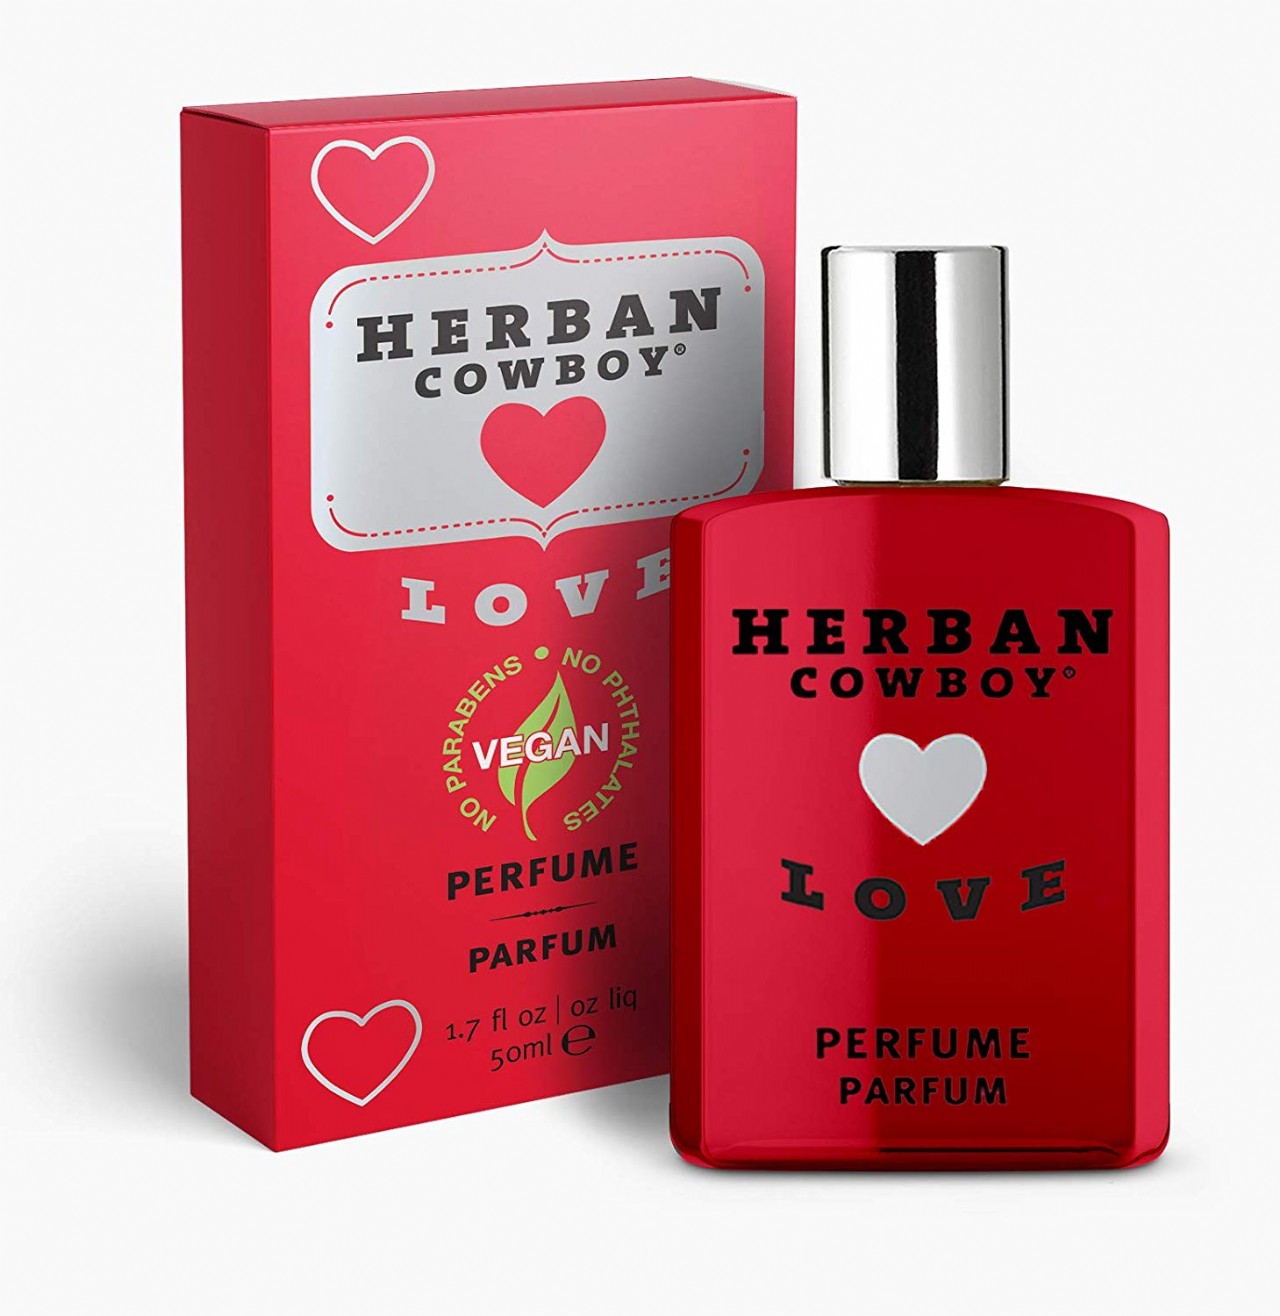 Herban Cowboy Women's Perfume, Love Perfume is vegan friendly